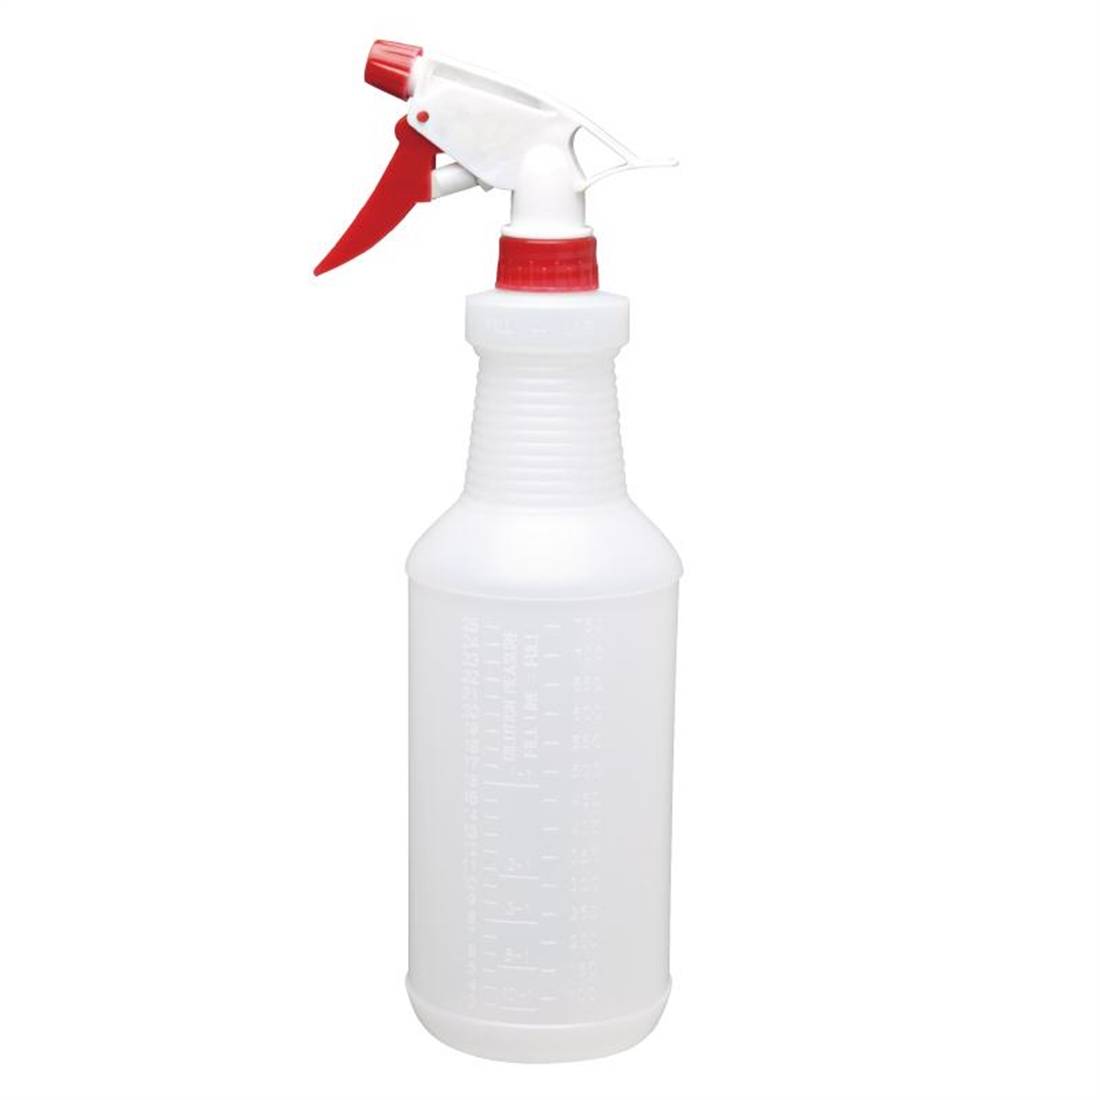 Jantex Colour Coded Spray Bottles Red 750ml